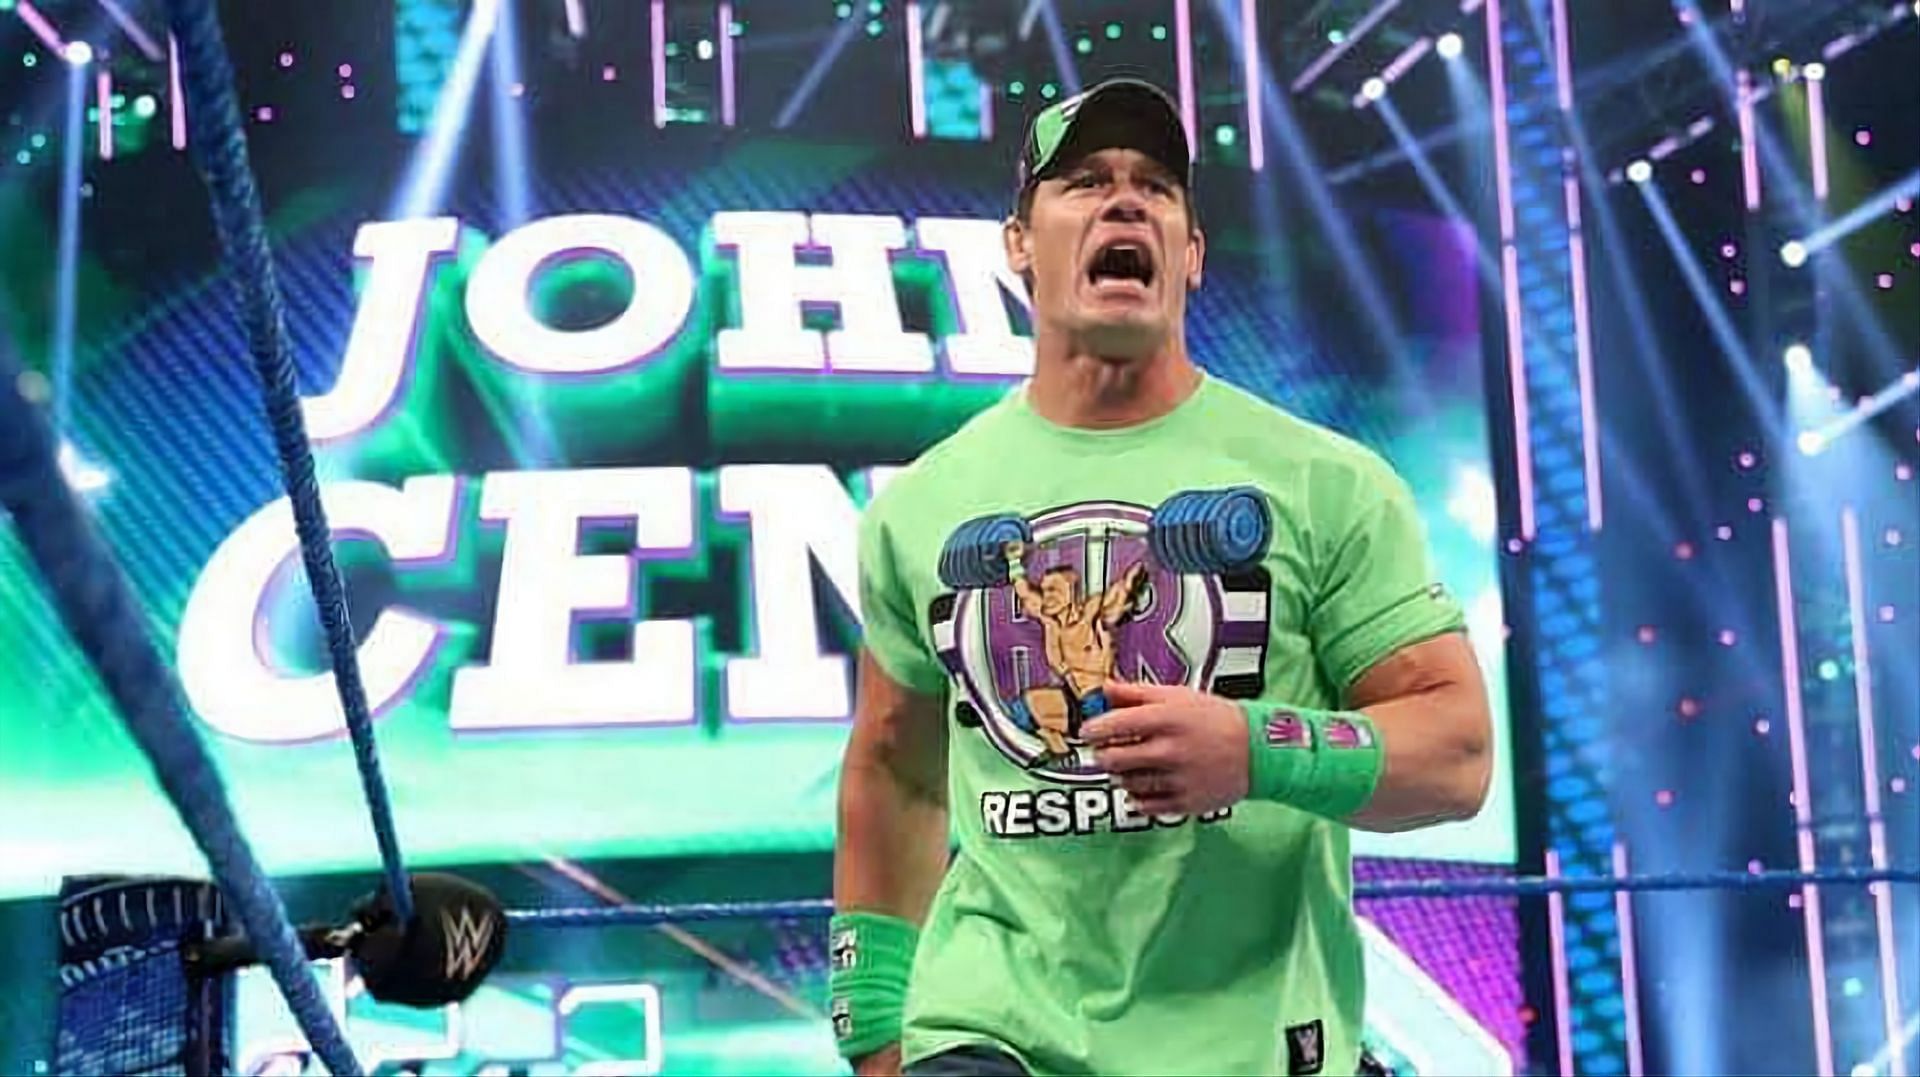 16-time world champion John Cena